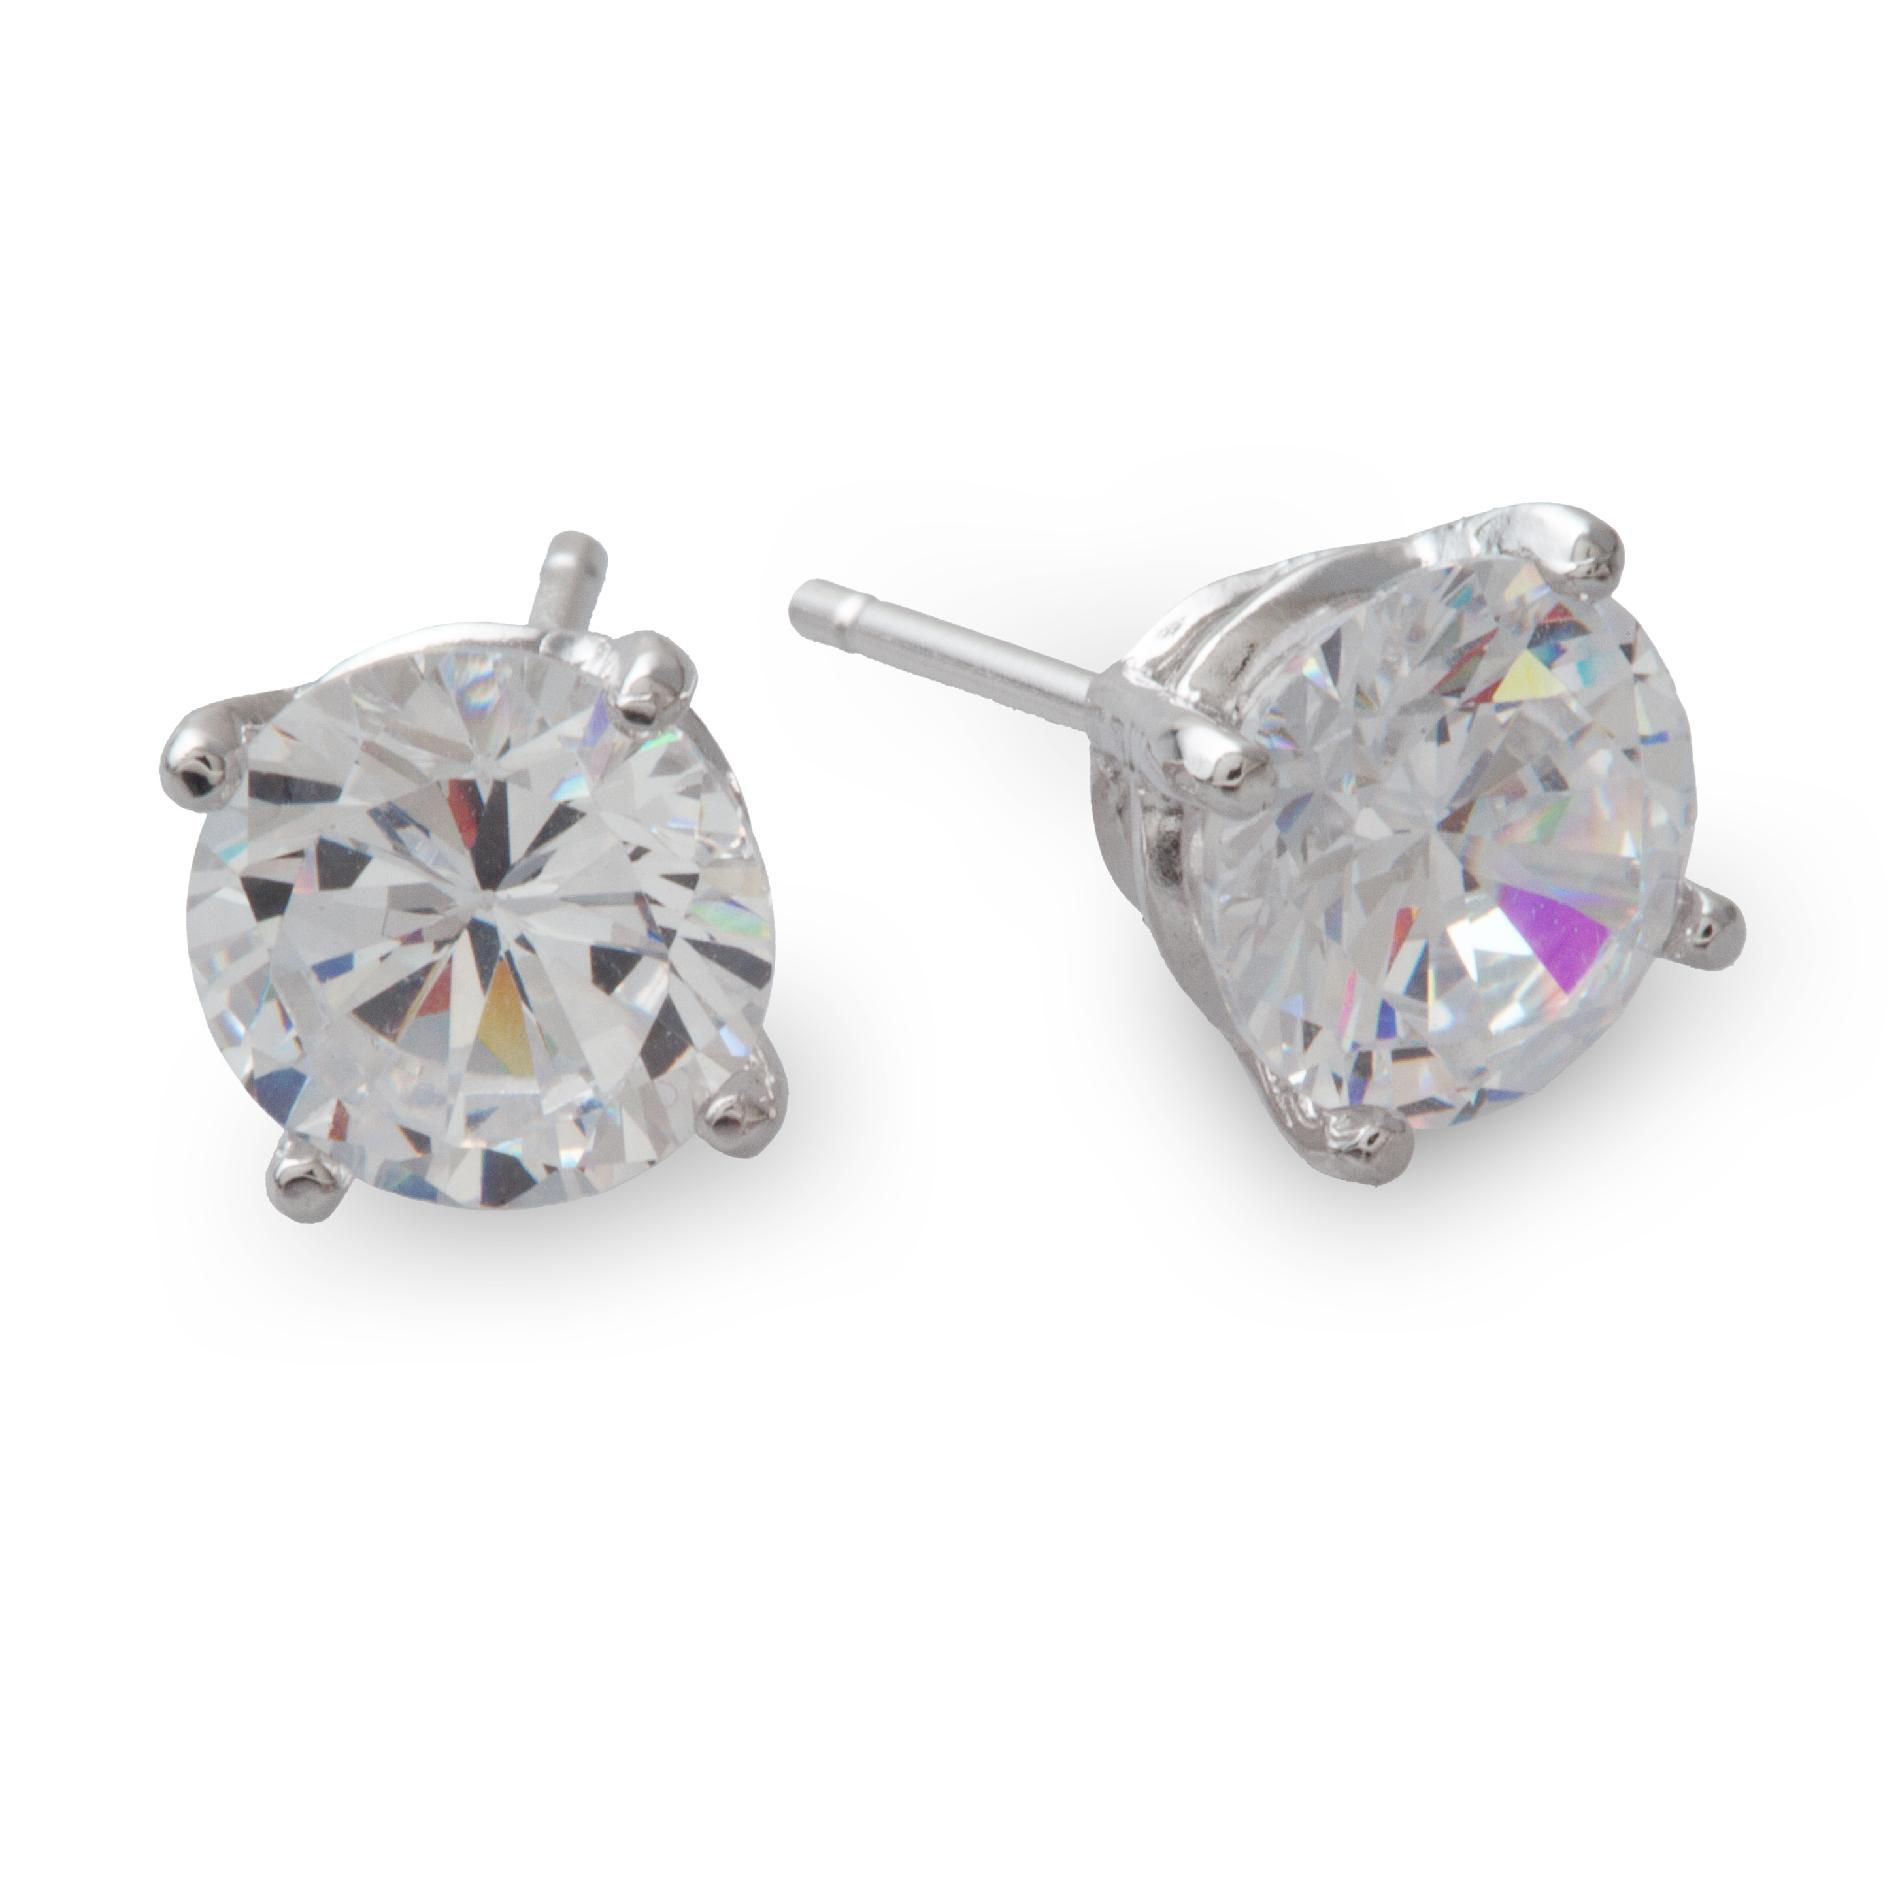 Cubic Zirconia Clutchless Hoop Earrings in Sterling Silver   Jewelry   Earrings   Sterling Silver